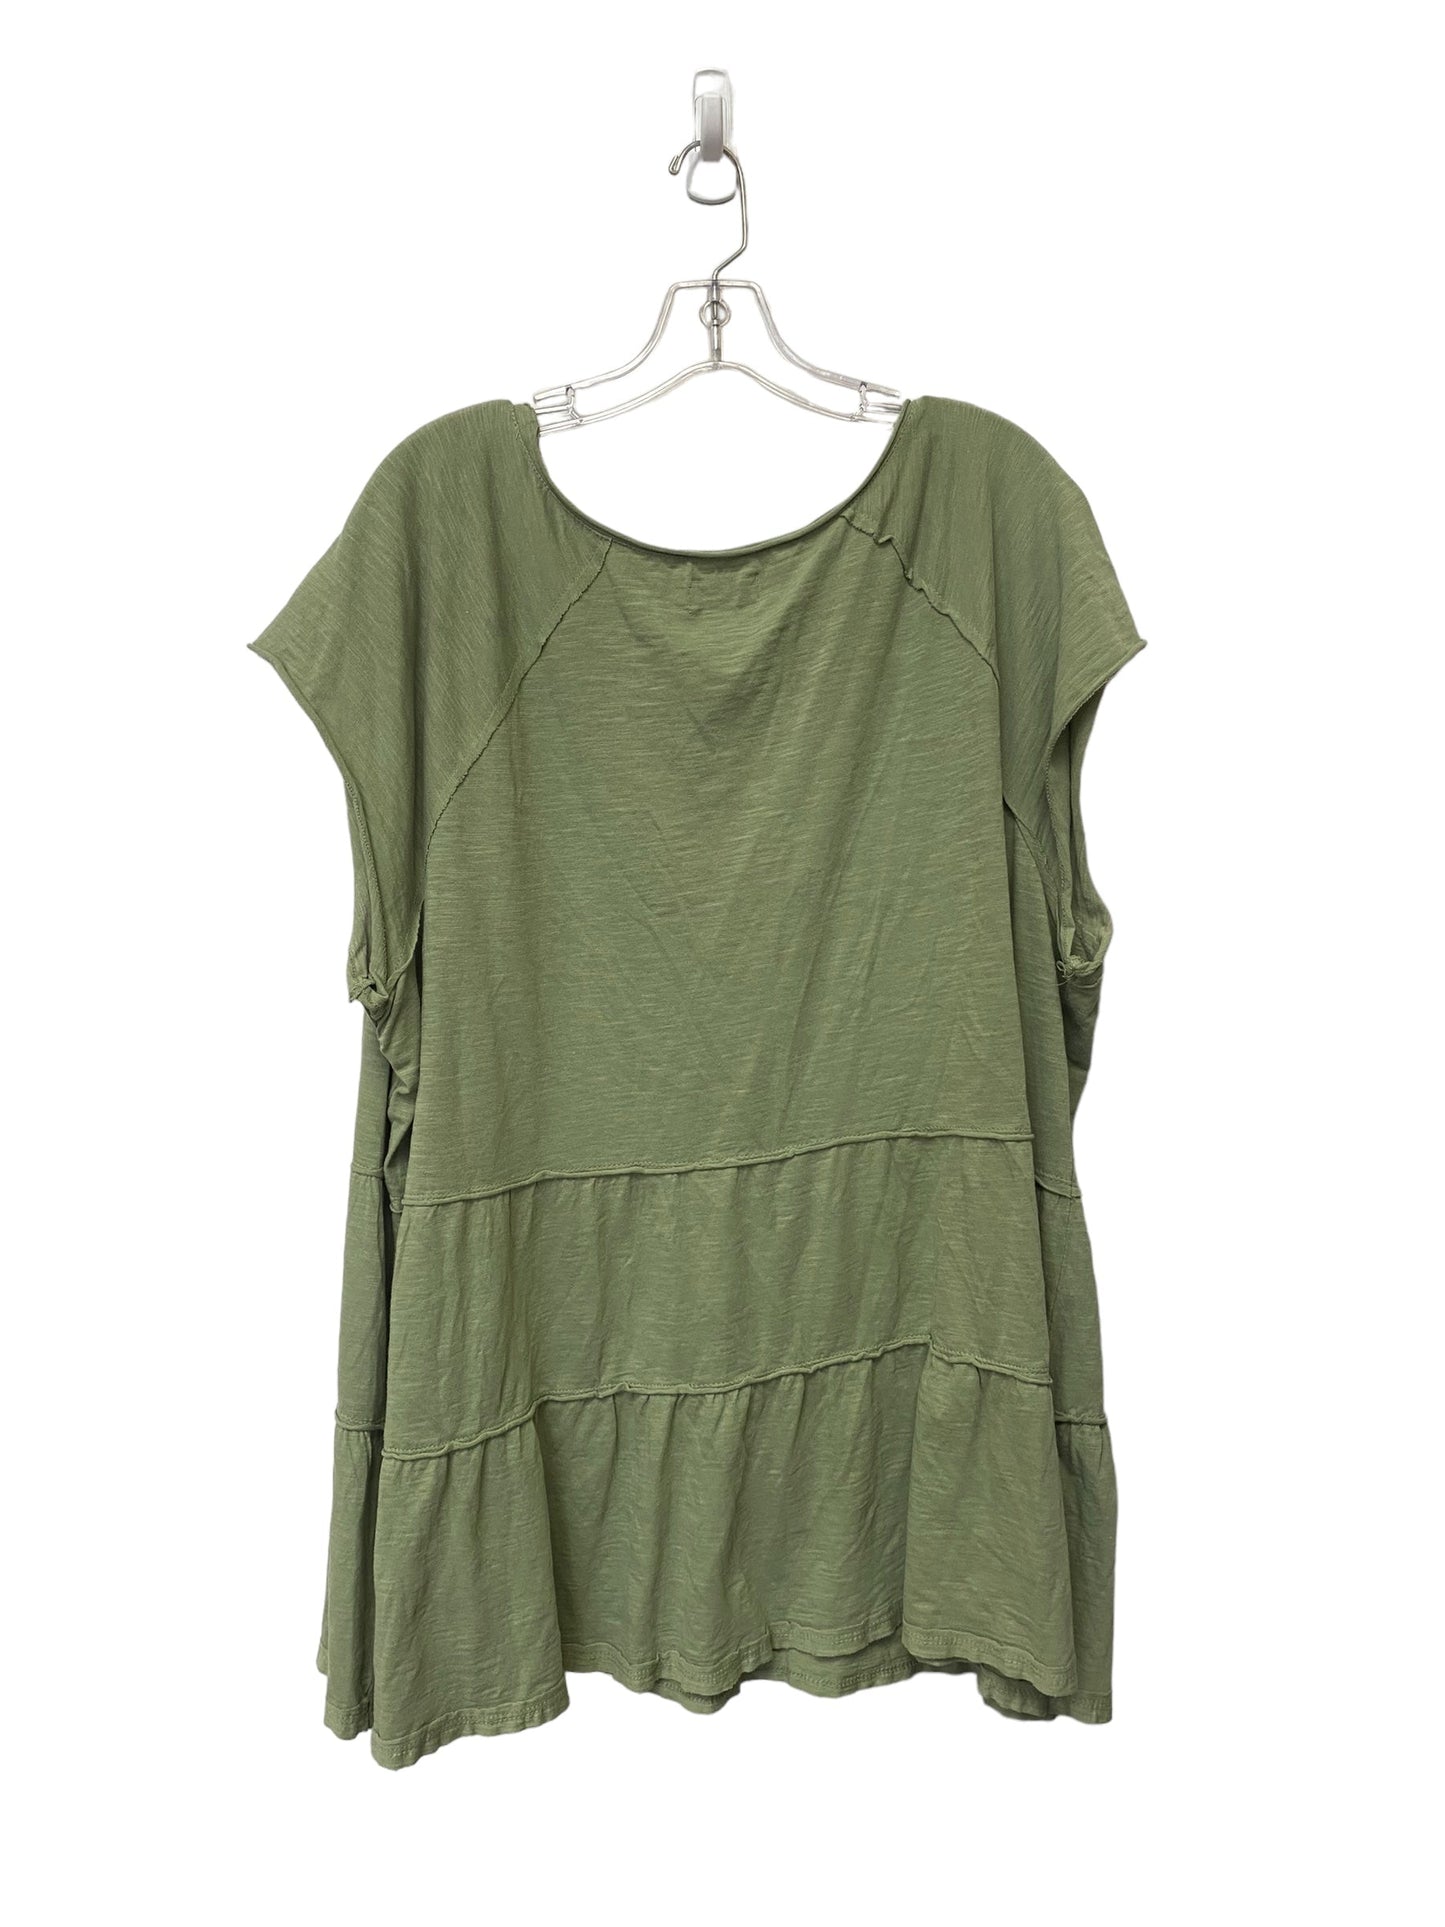 Green Top Short Sleeve Basic True Craft, Size 3x